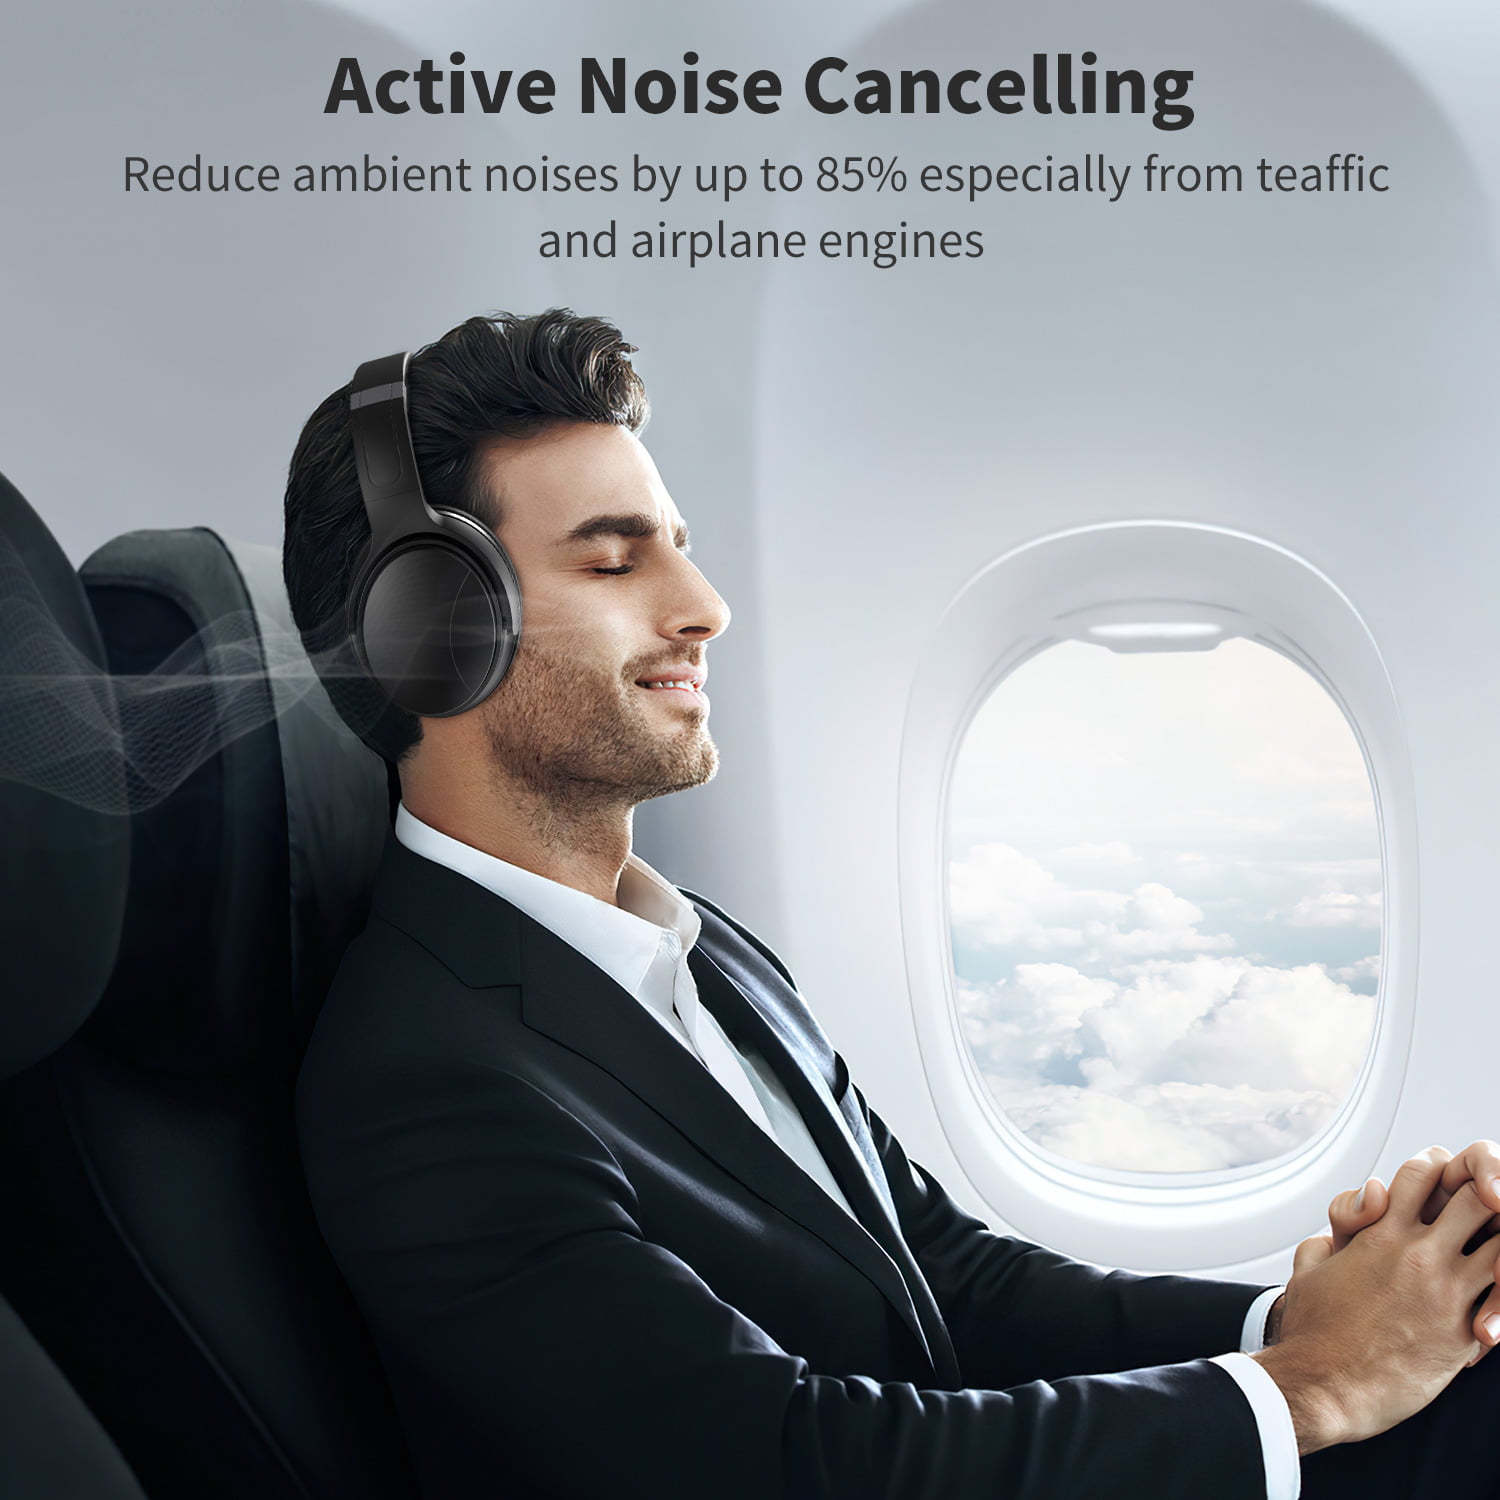 VILINICE Black Wireless Noise Cancelling Headphones